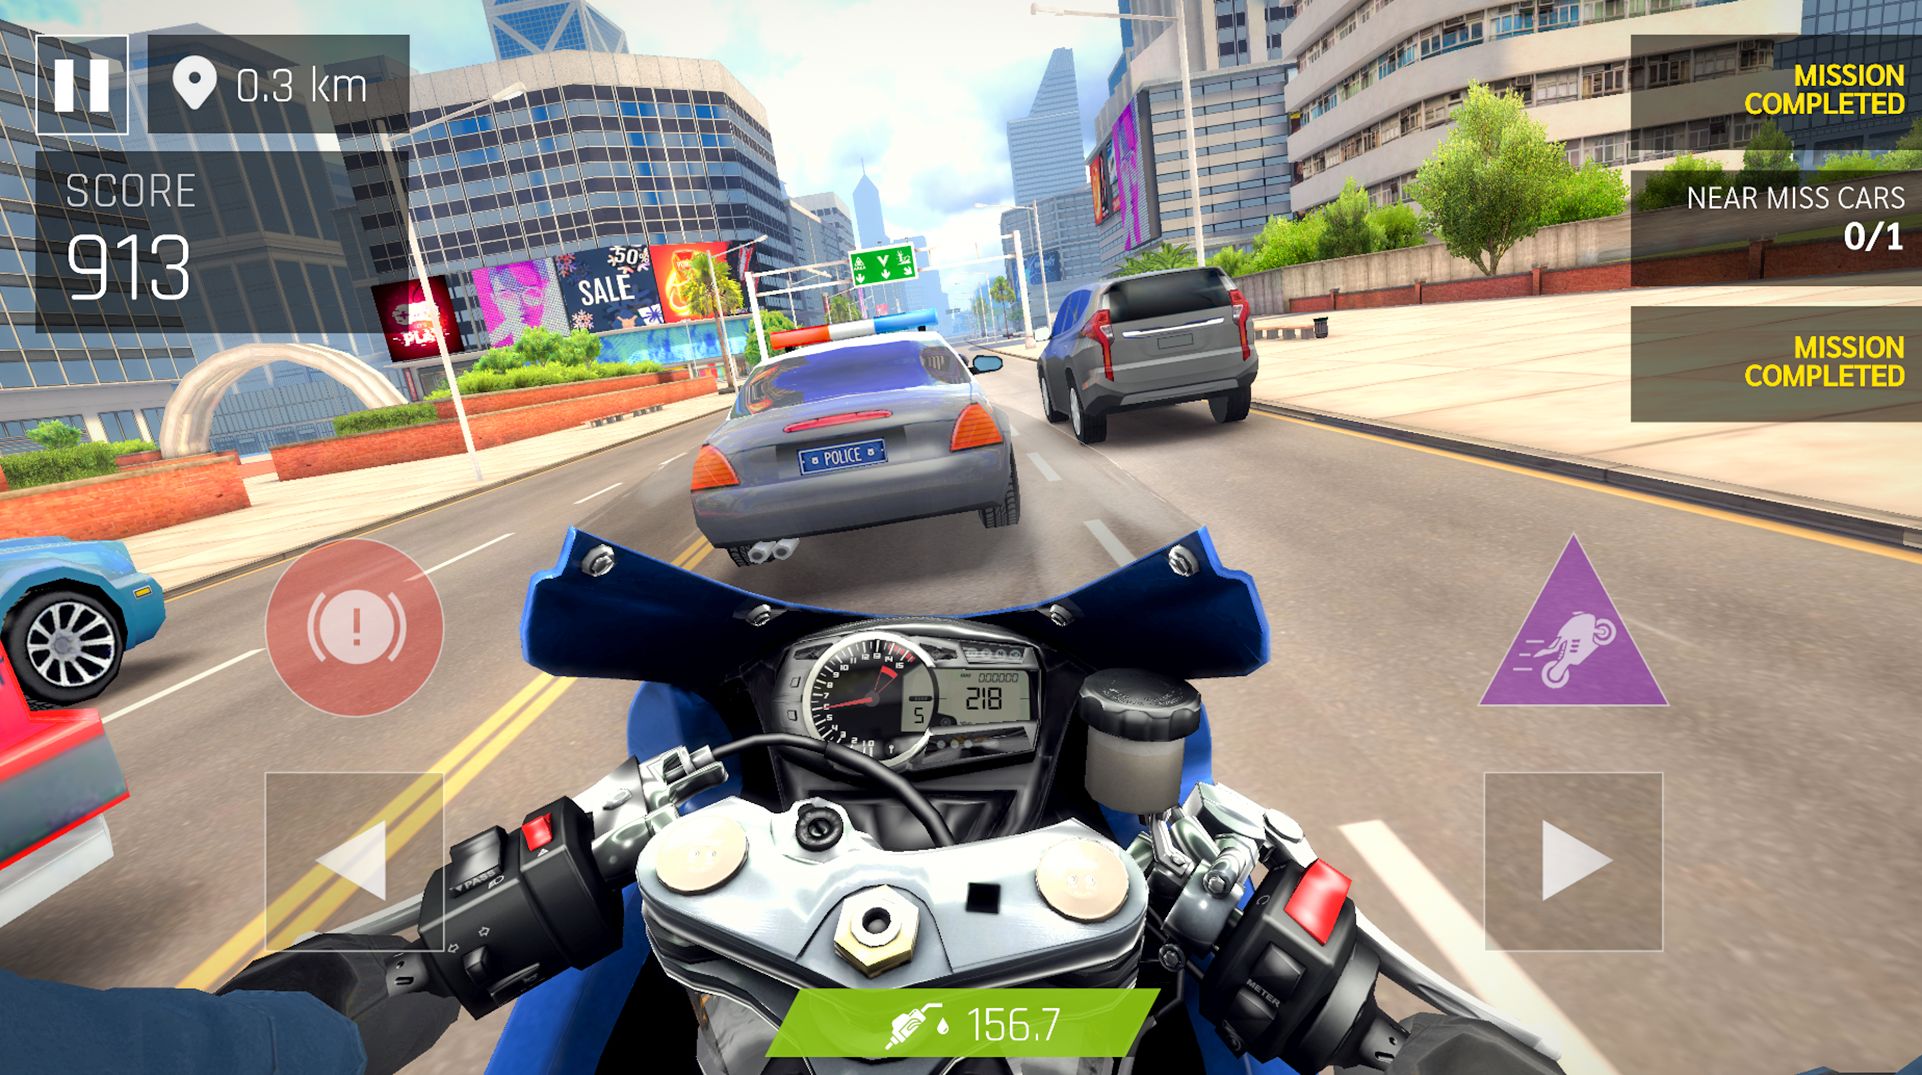 Télécharger Real Moto Rider: Traffic Race pour Android gratuit.